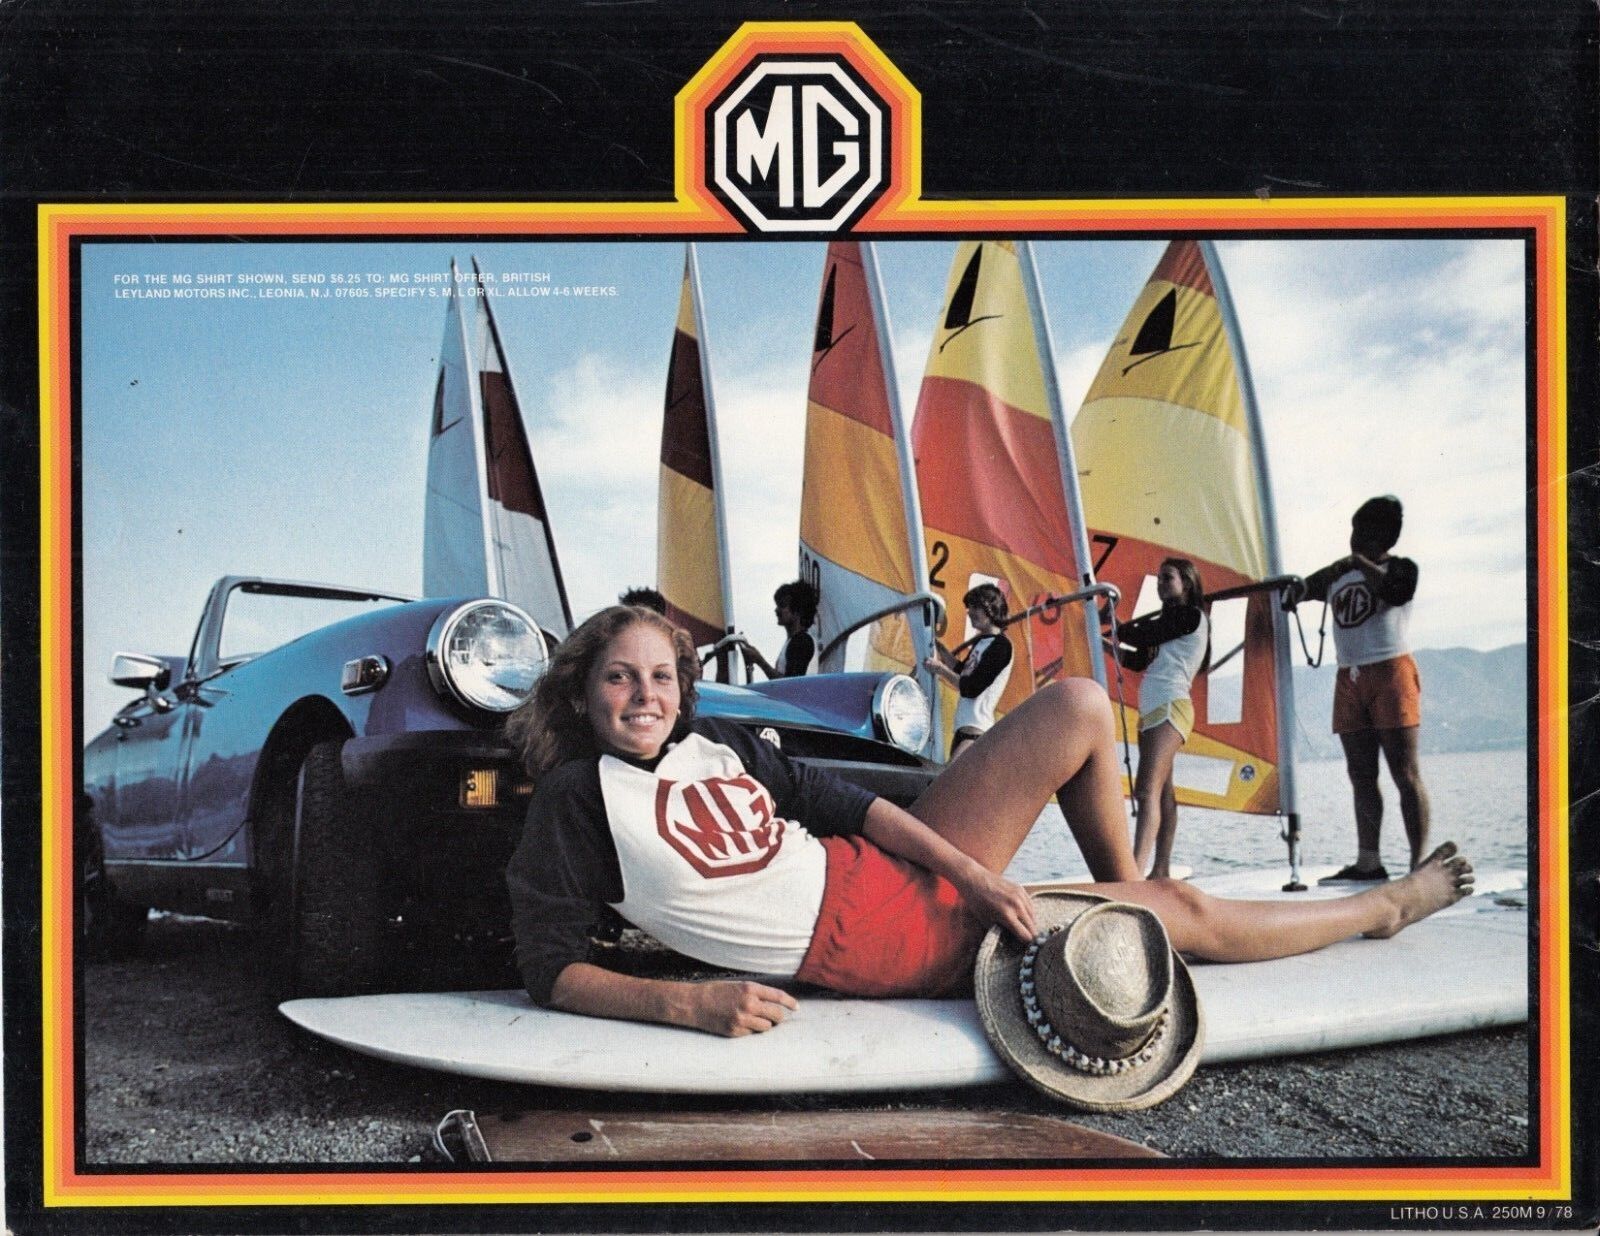 MG Midget 1979 Car Dealer Sales Brochure - Original -  Cute Girl on Cover 